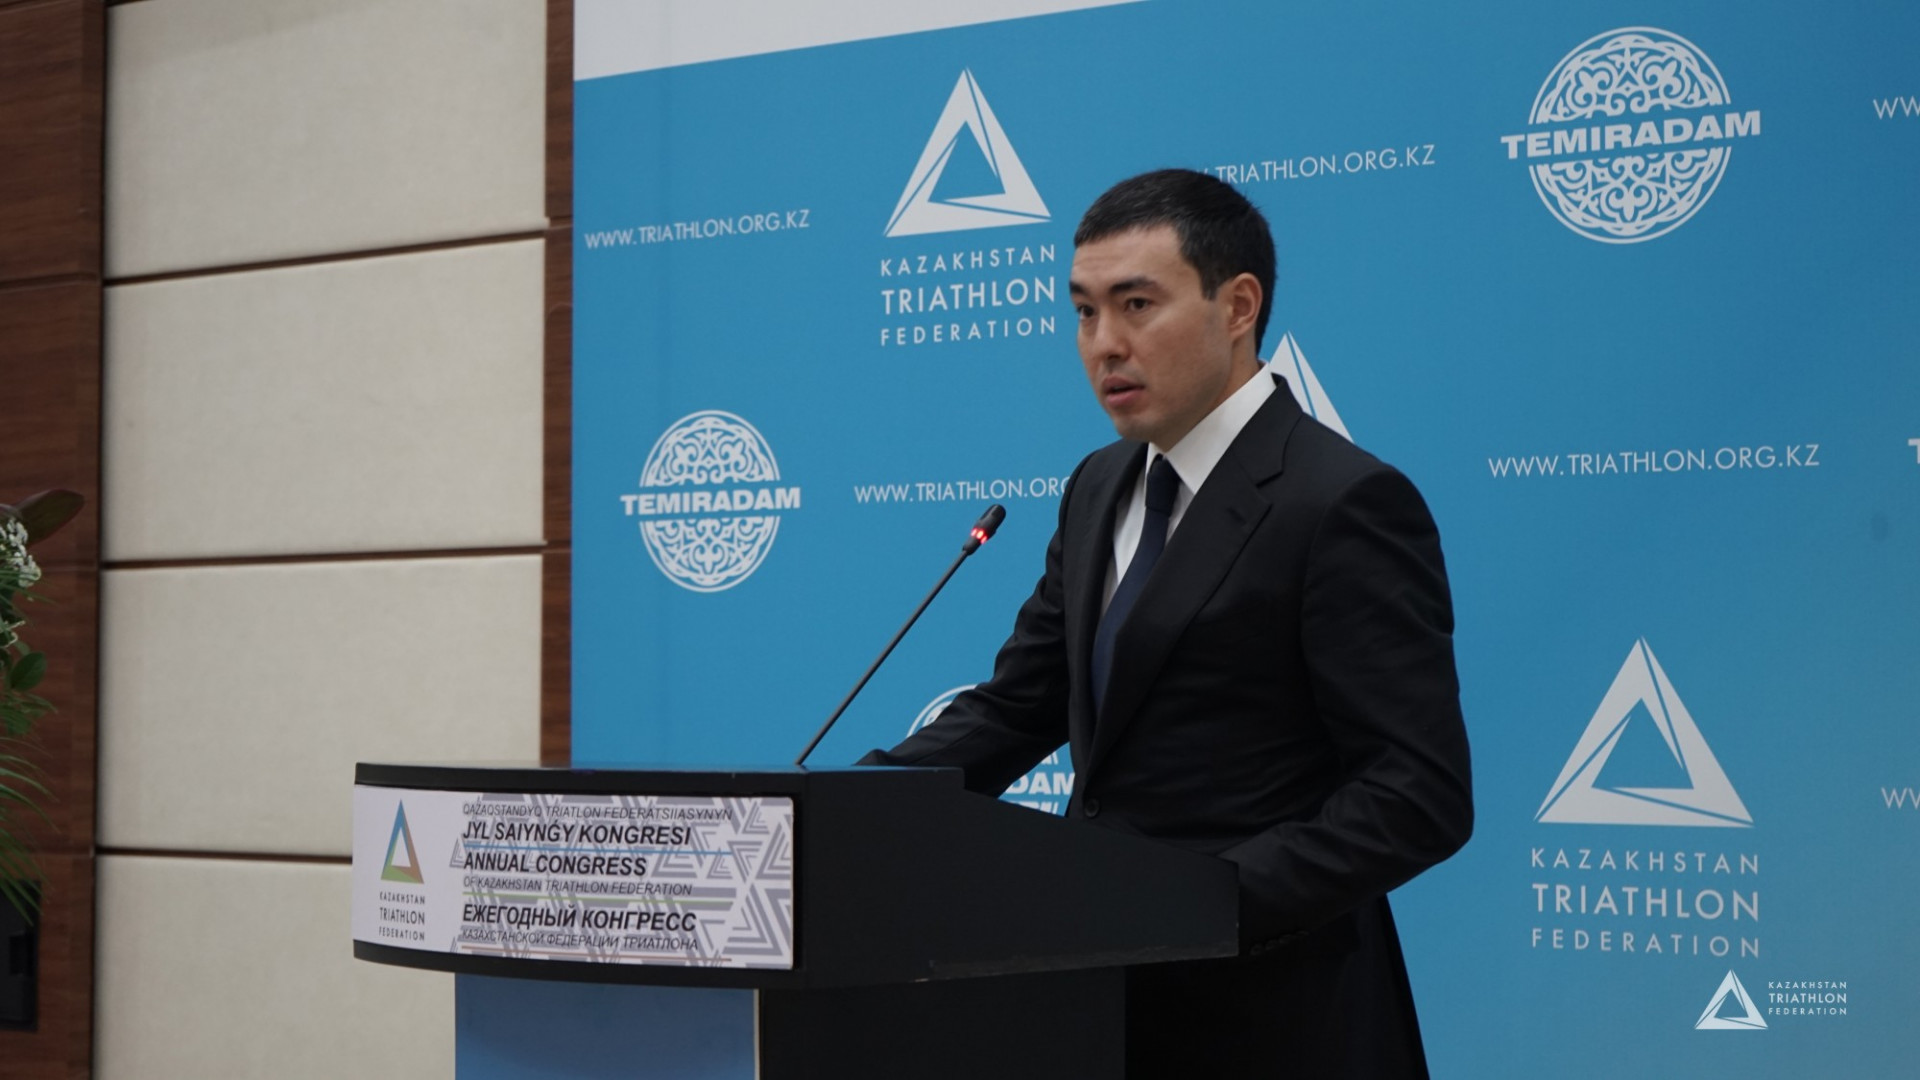 President of Kazakhstan Triathlon Federation appointed